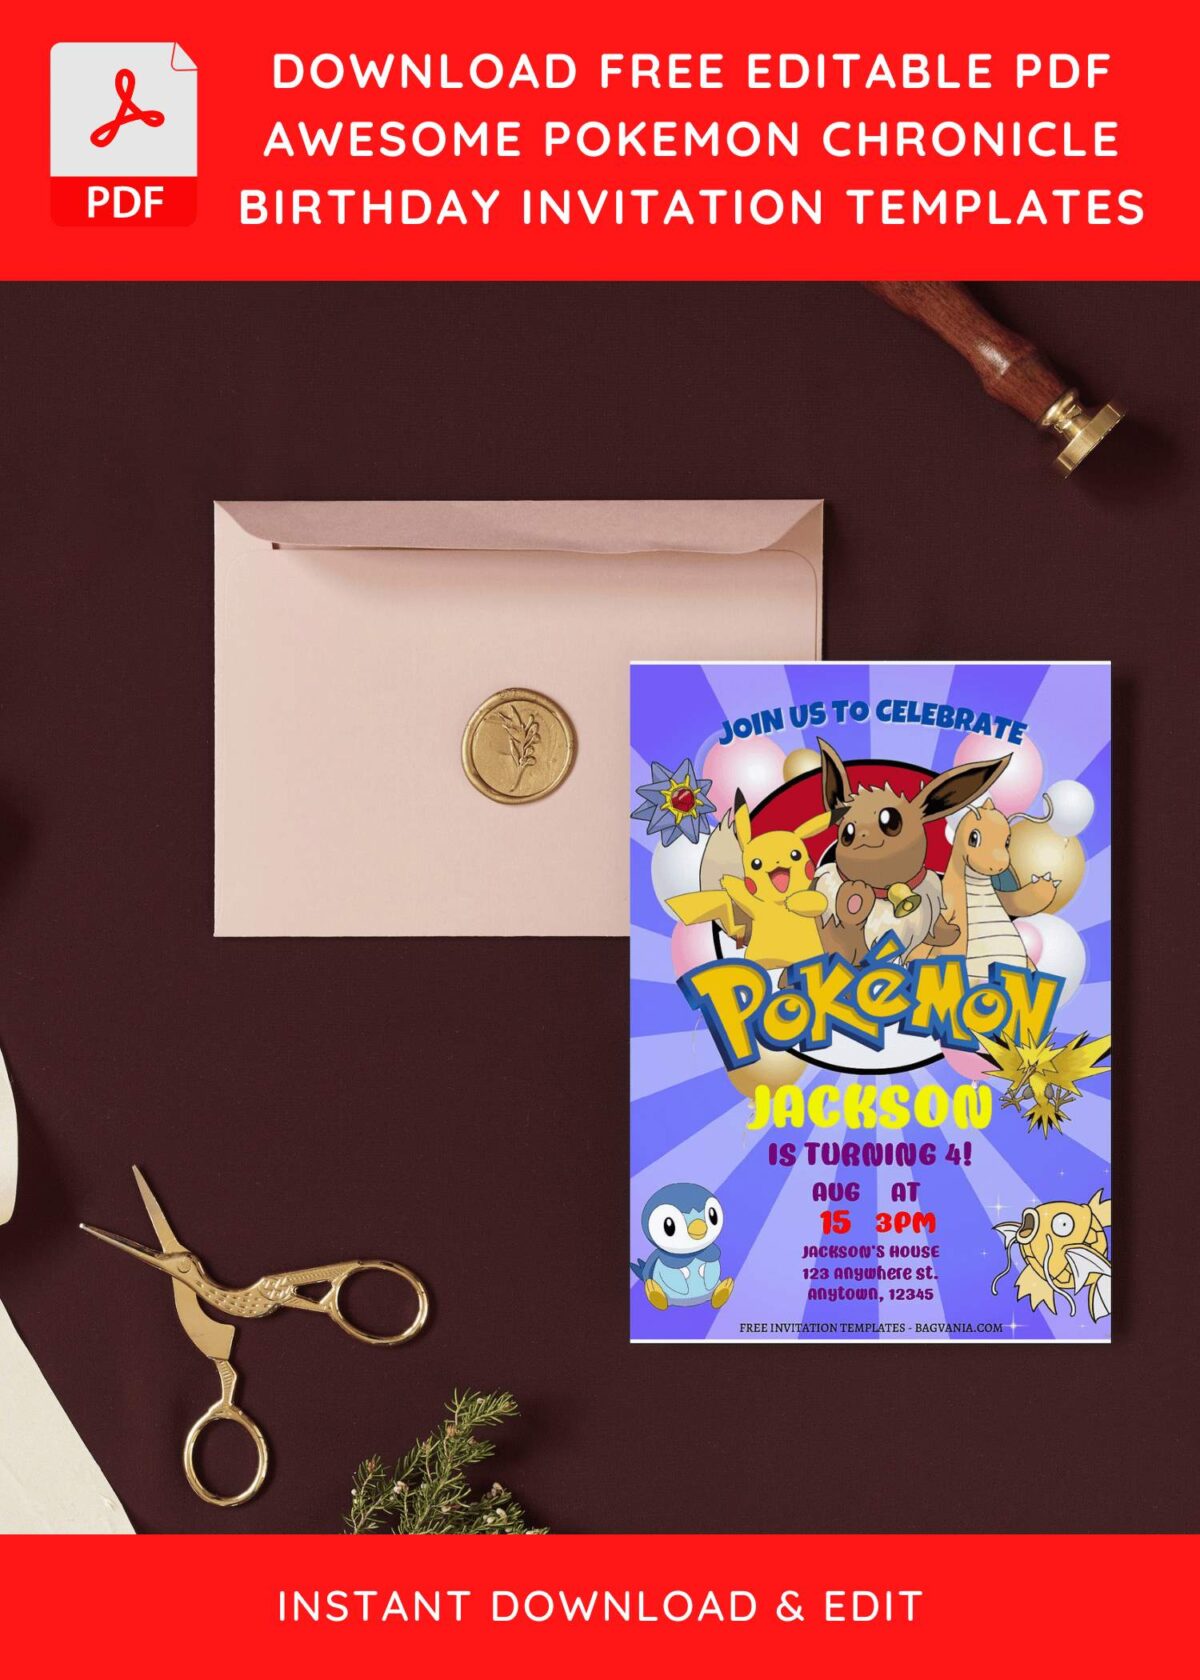 (Free Editable PDF) Epic Pokémon Chronicle Birthday Invitation Templates I